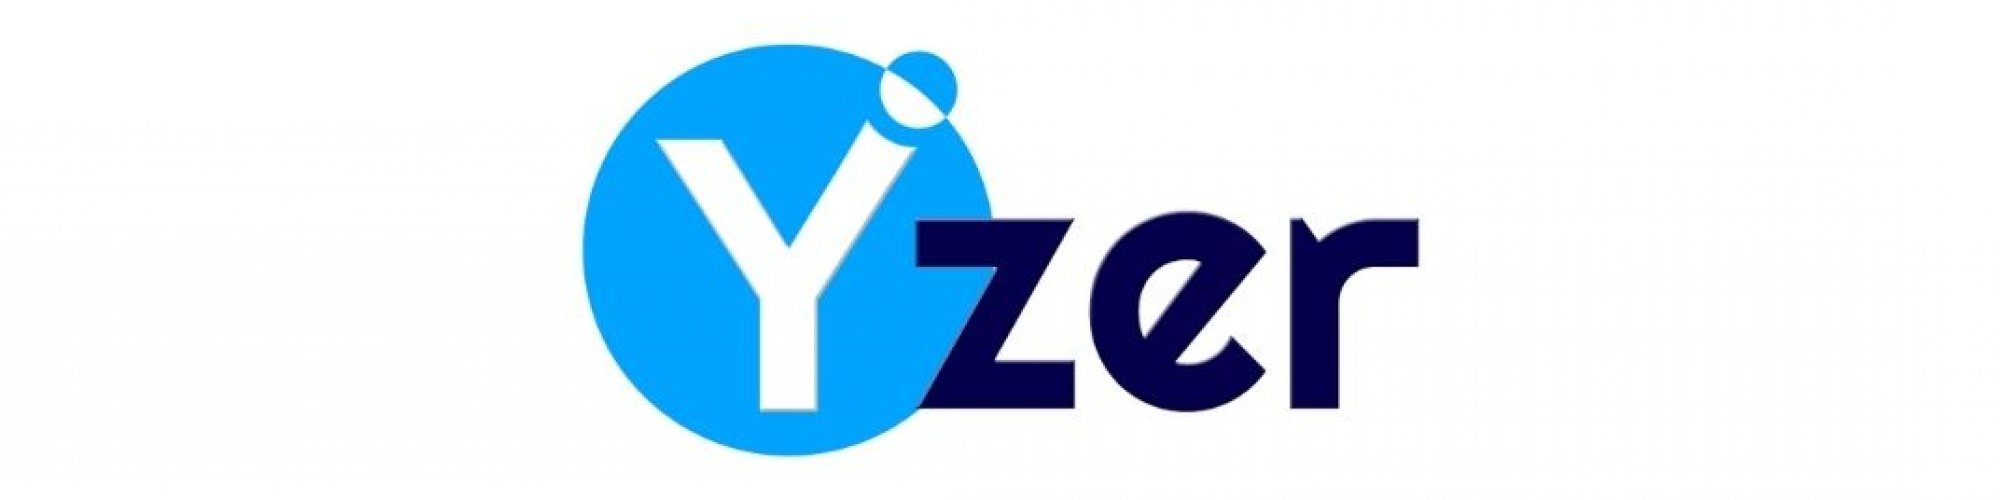 Yzer Limited